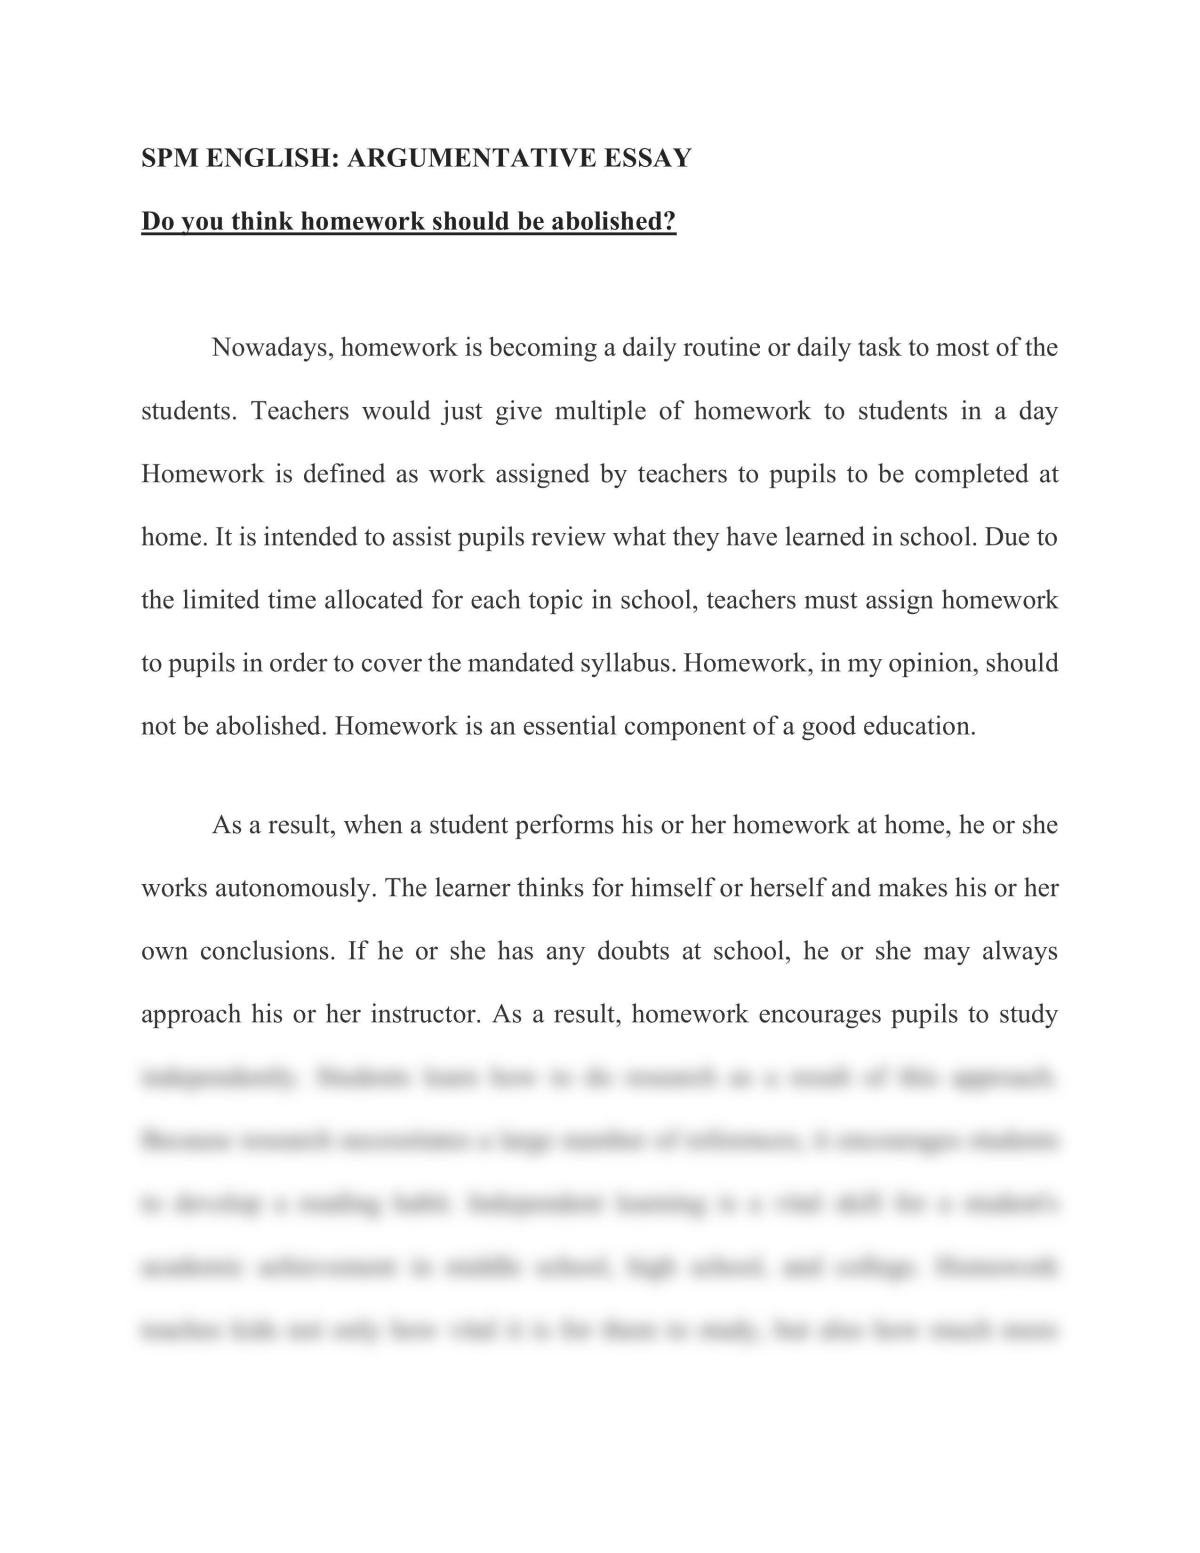 Argumentative Essay: Do you think homework should be abolished? - Page 1